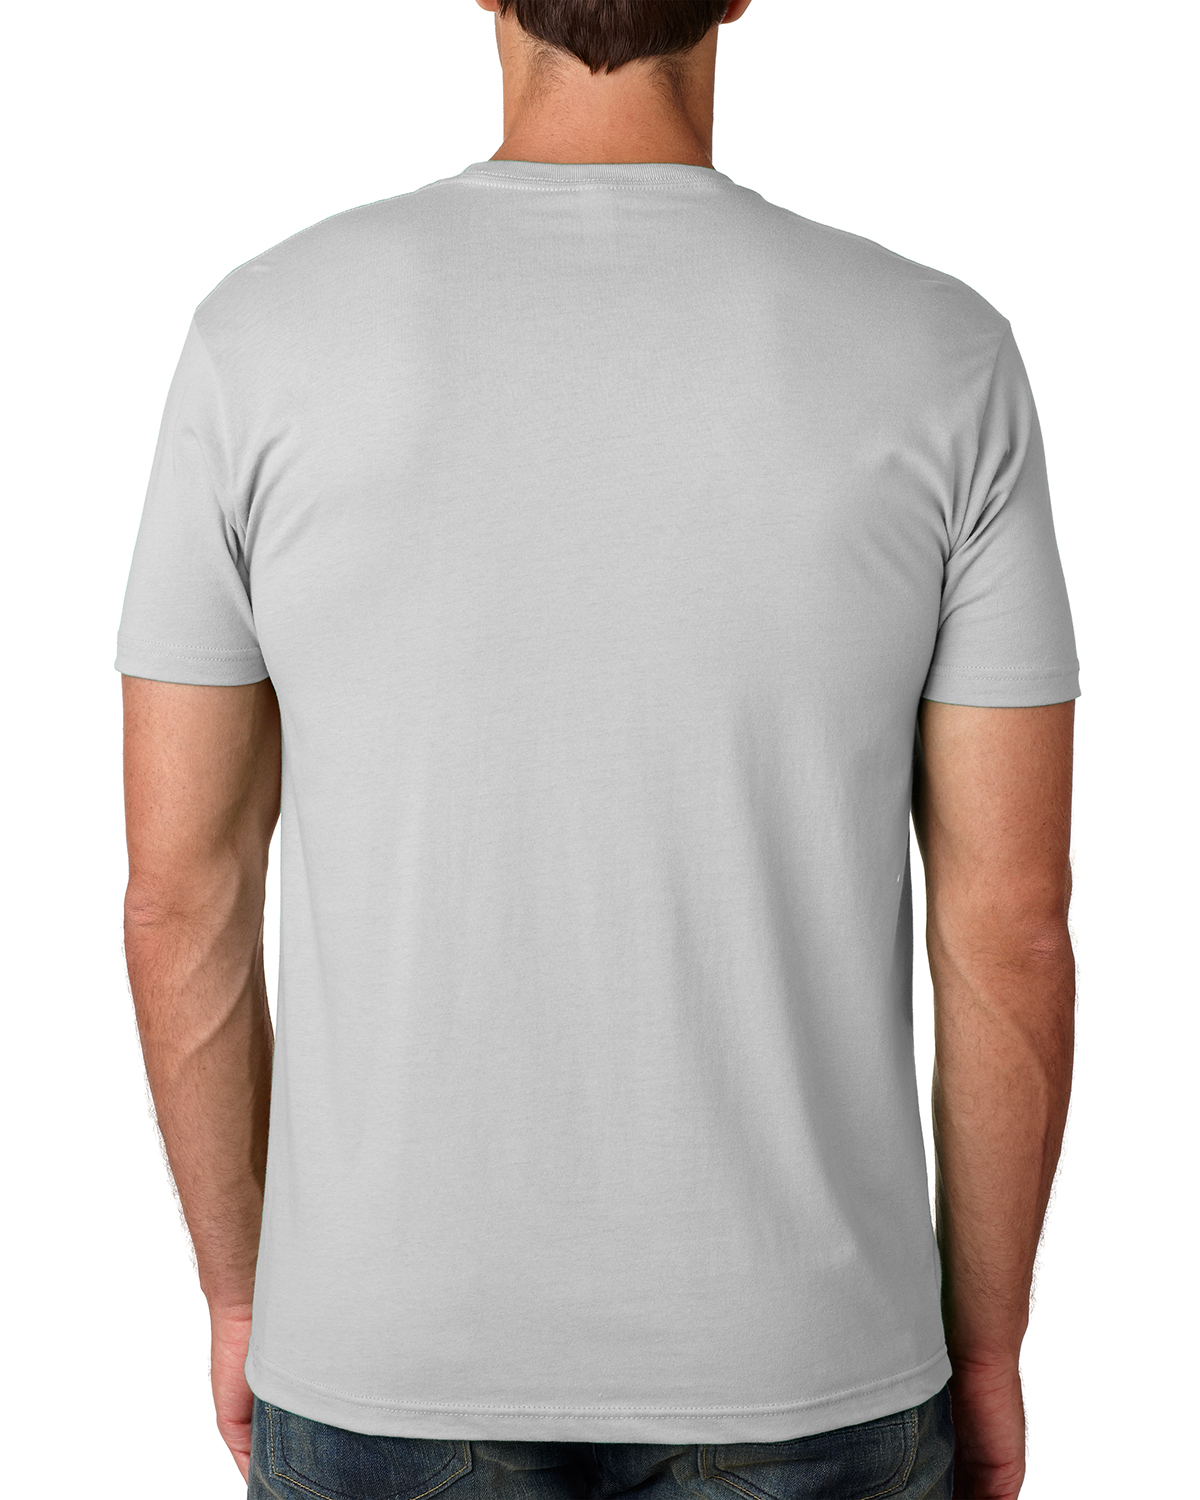 NEW Next Level 100% Cotton Men's Premium Fitted Crew Neck XS-XL T-Shirt ...